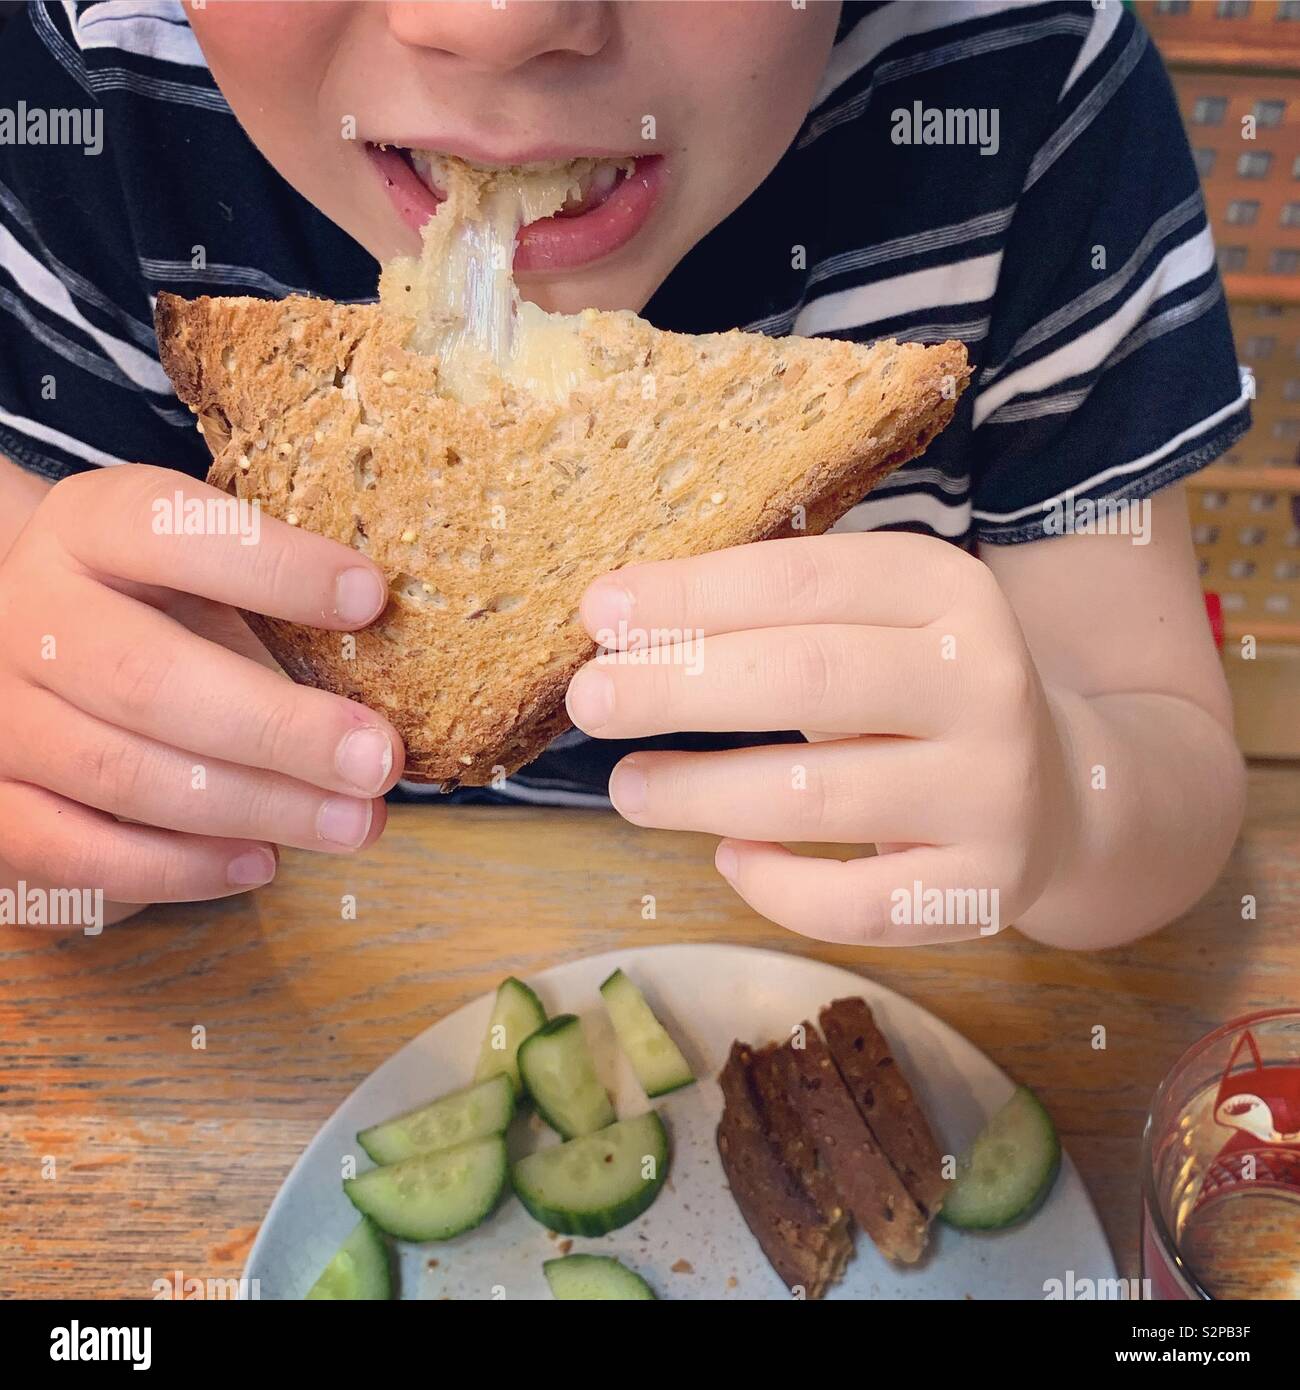 Boy eating a Cheese Toastie Stock Photo